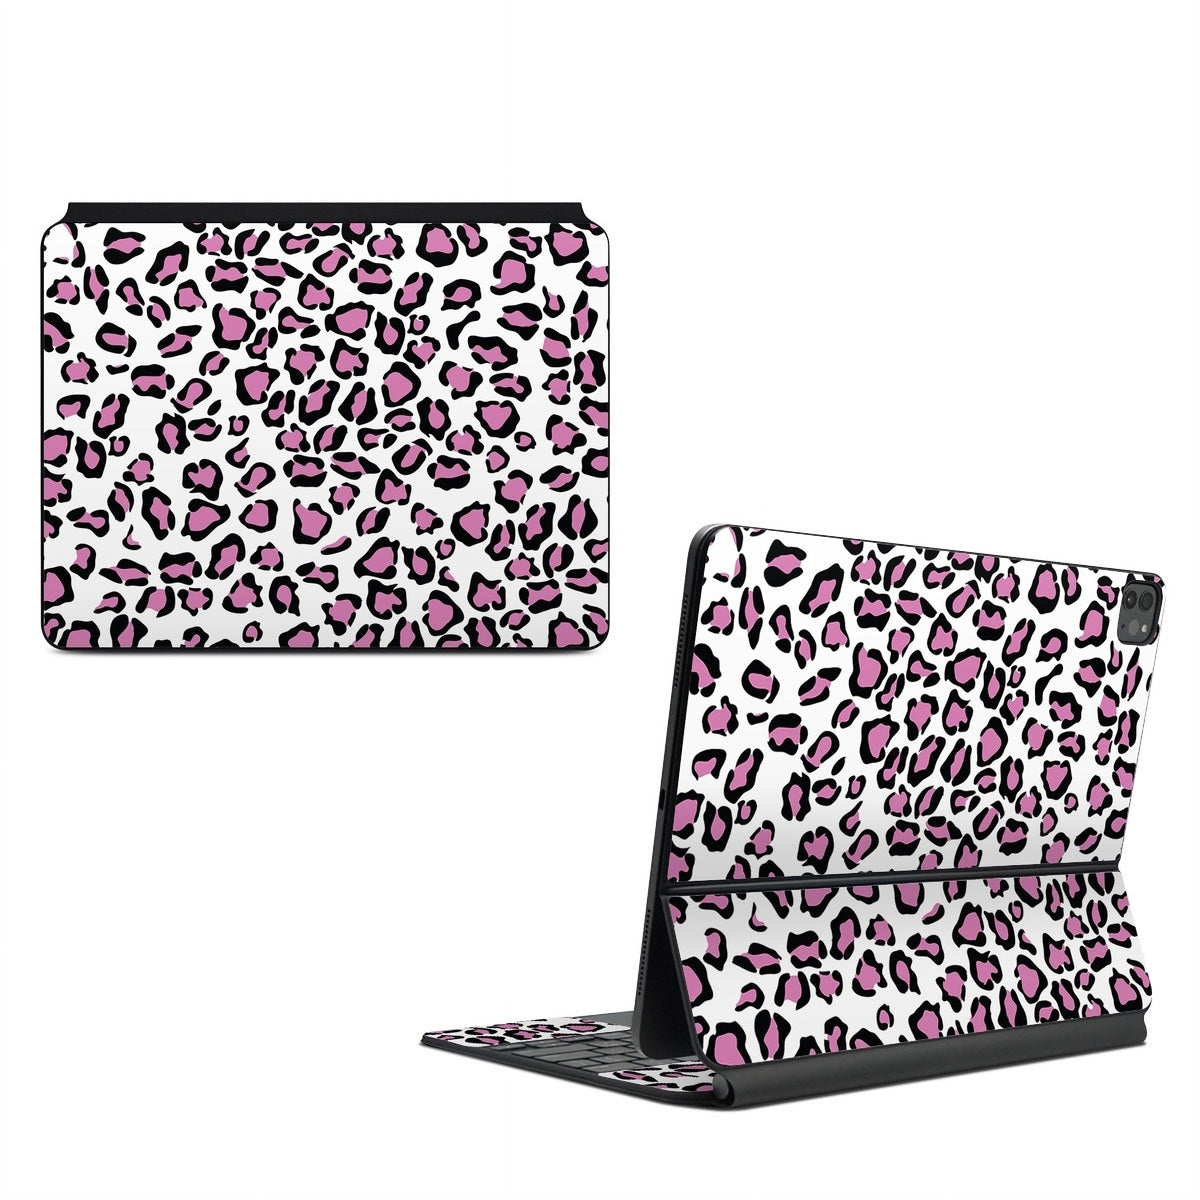 Leopard Love - Apple Magic Keyboard for iPad Skin